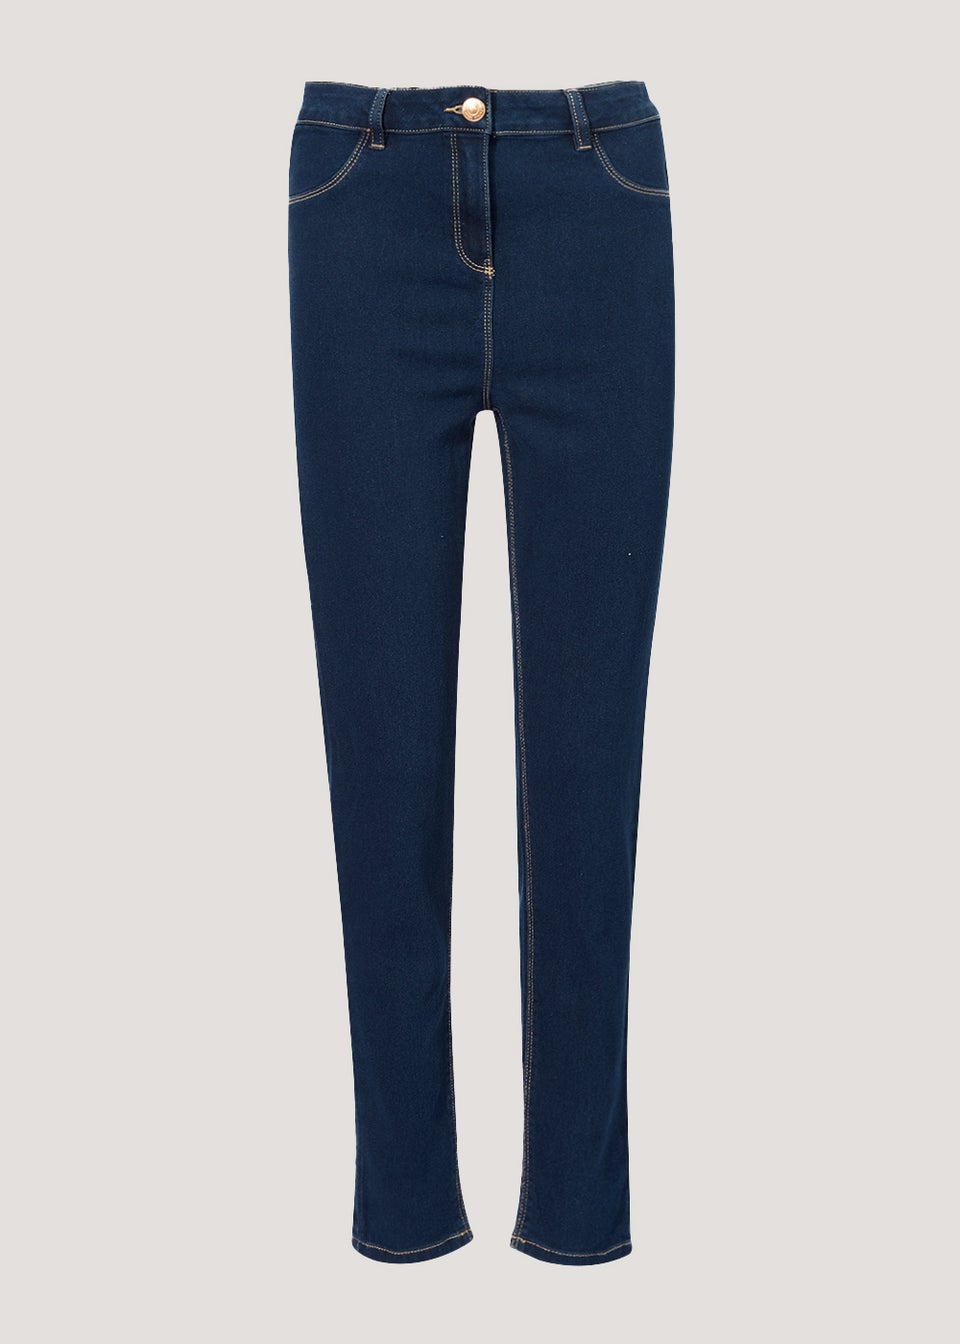 New Look loose straight jeans in dark wash indigo  ASOS